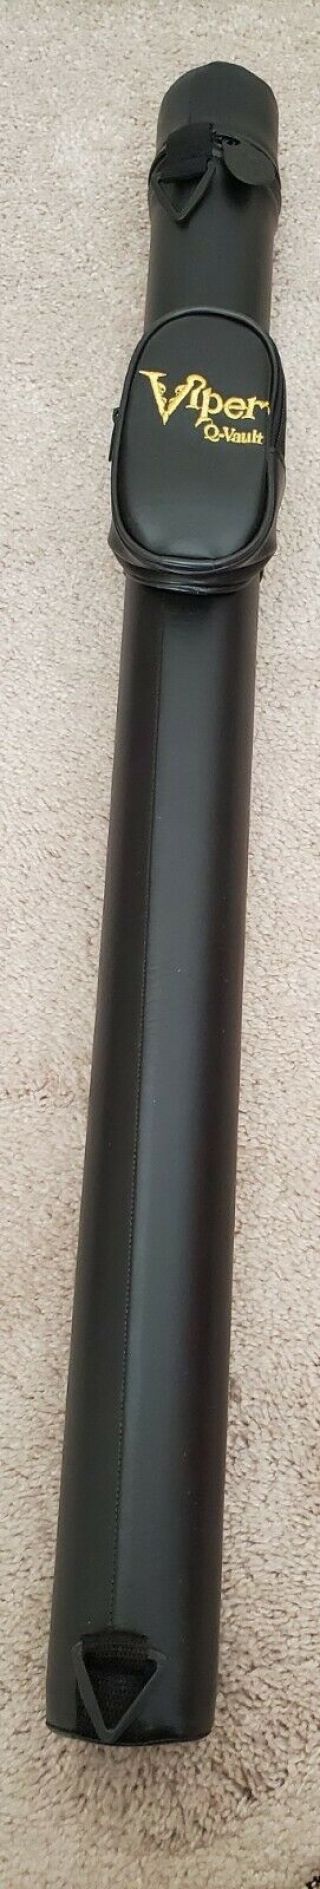 Vintage Viper Q Vault Pro Series Pool Cue Stick,  Black case - 19 oz Black & Red - AE 2